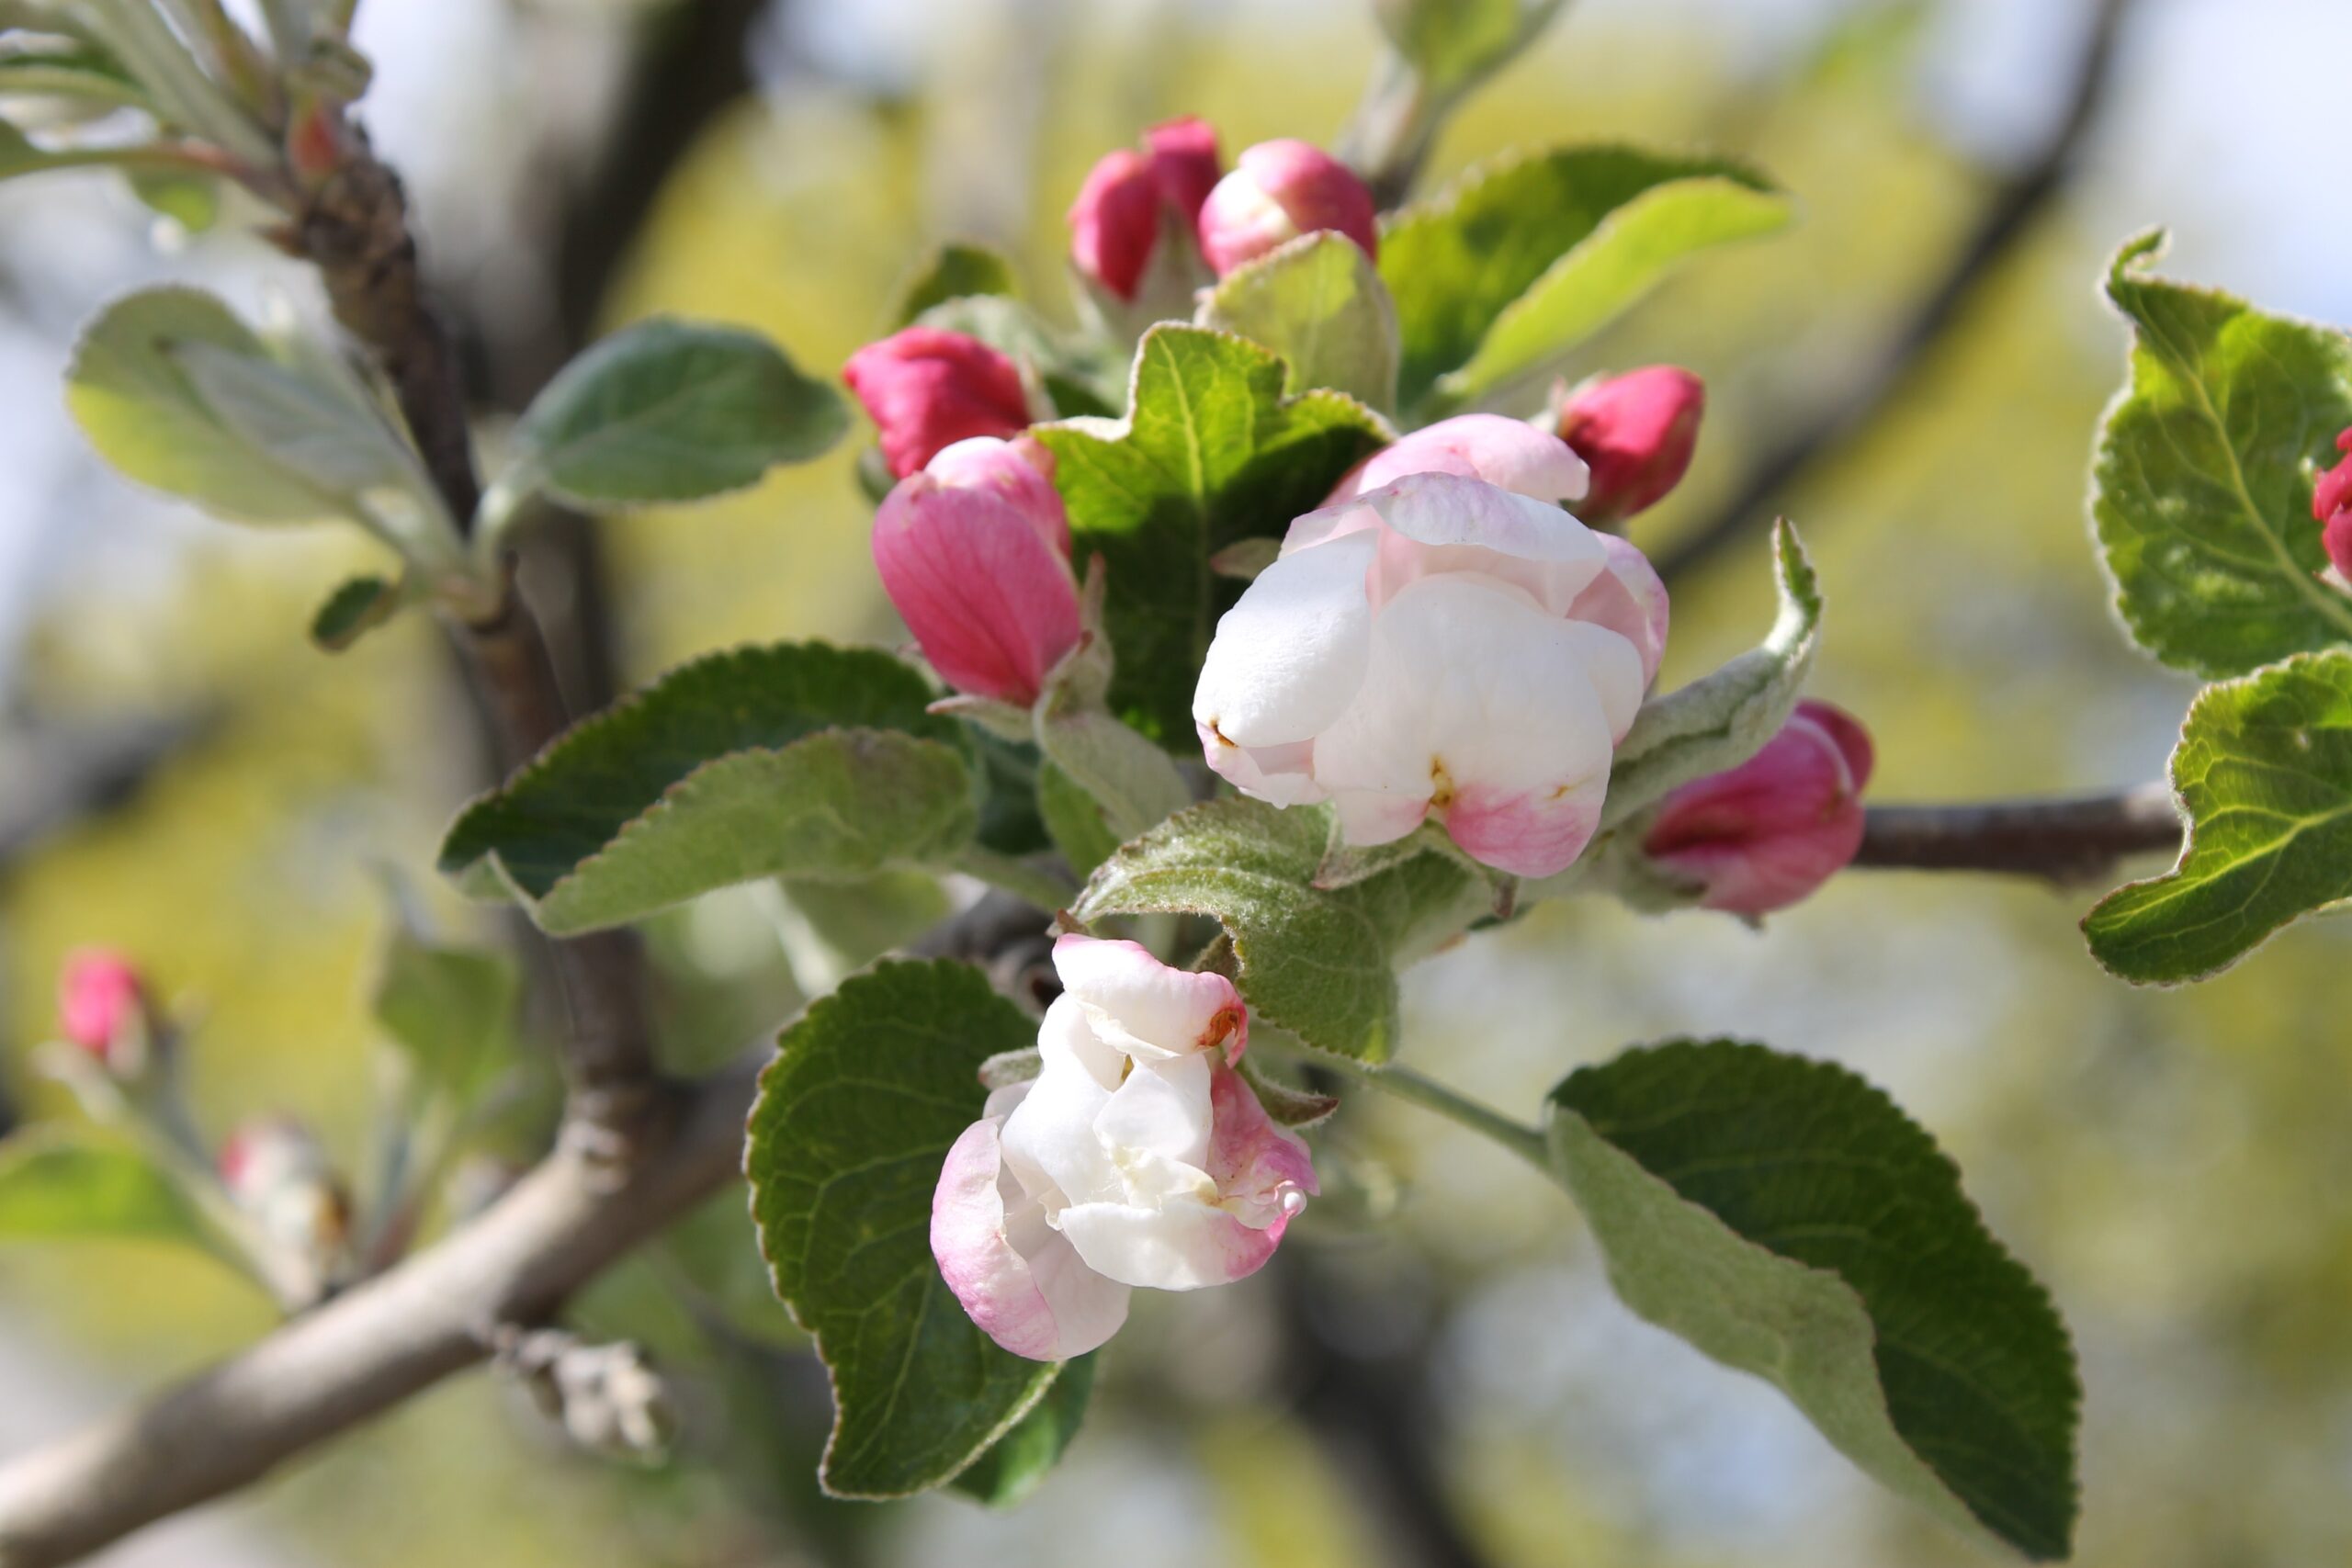 Skogaholm’s apple orchard at Skansen